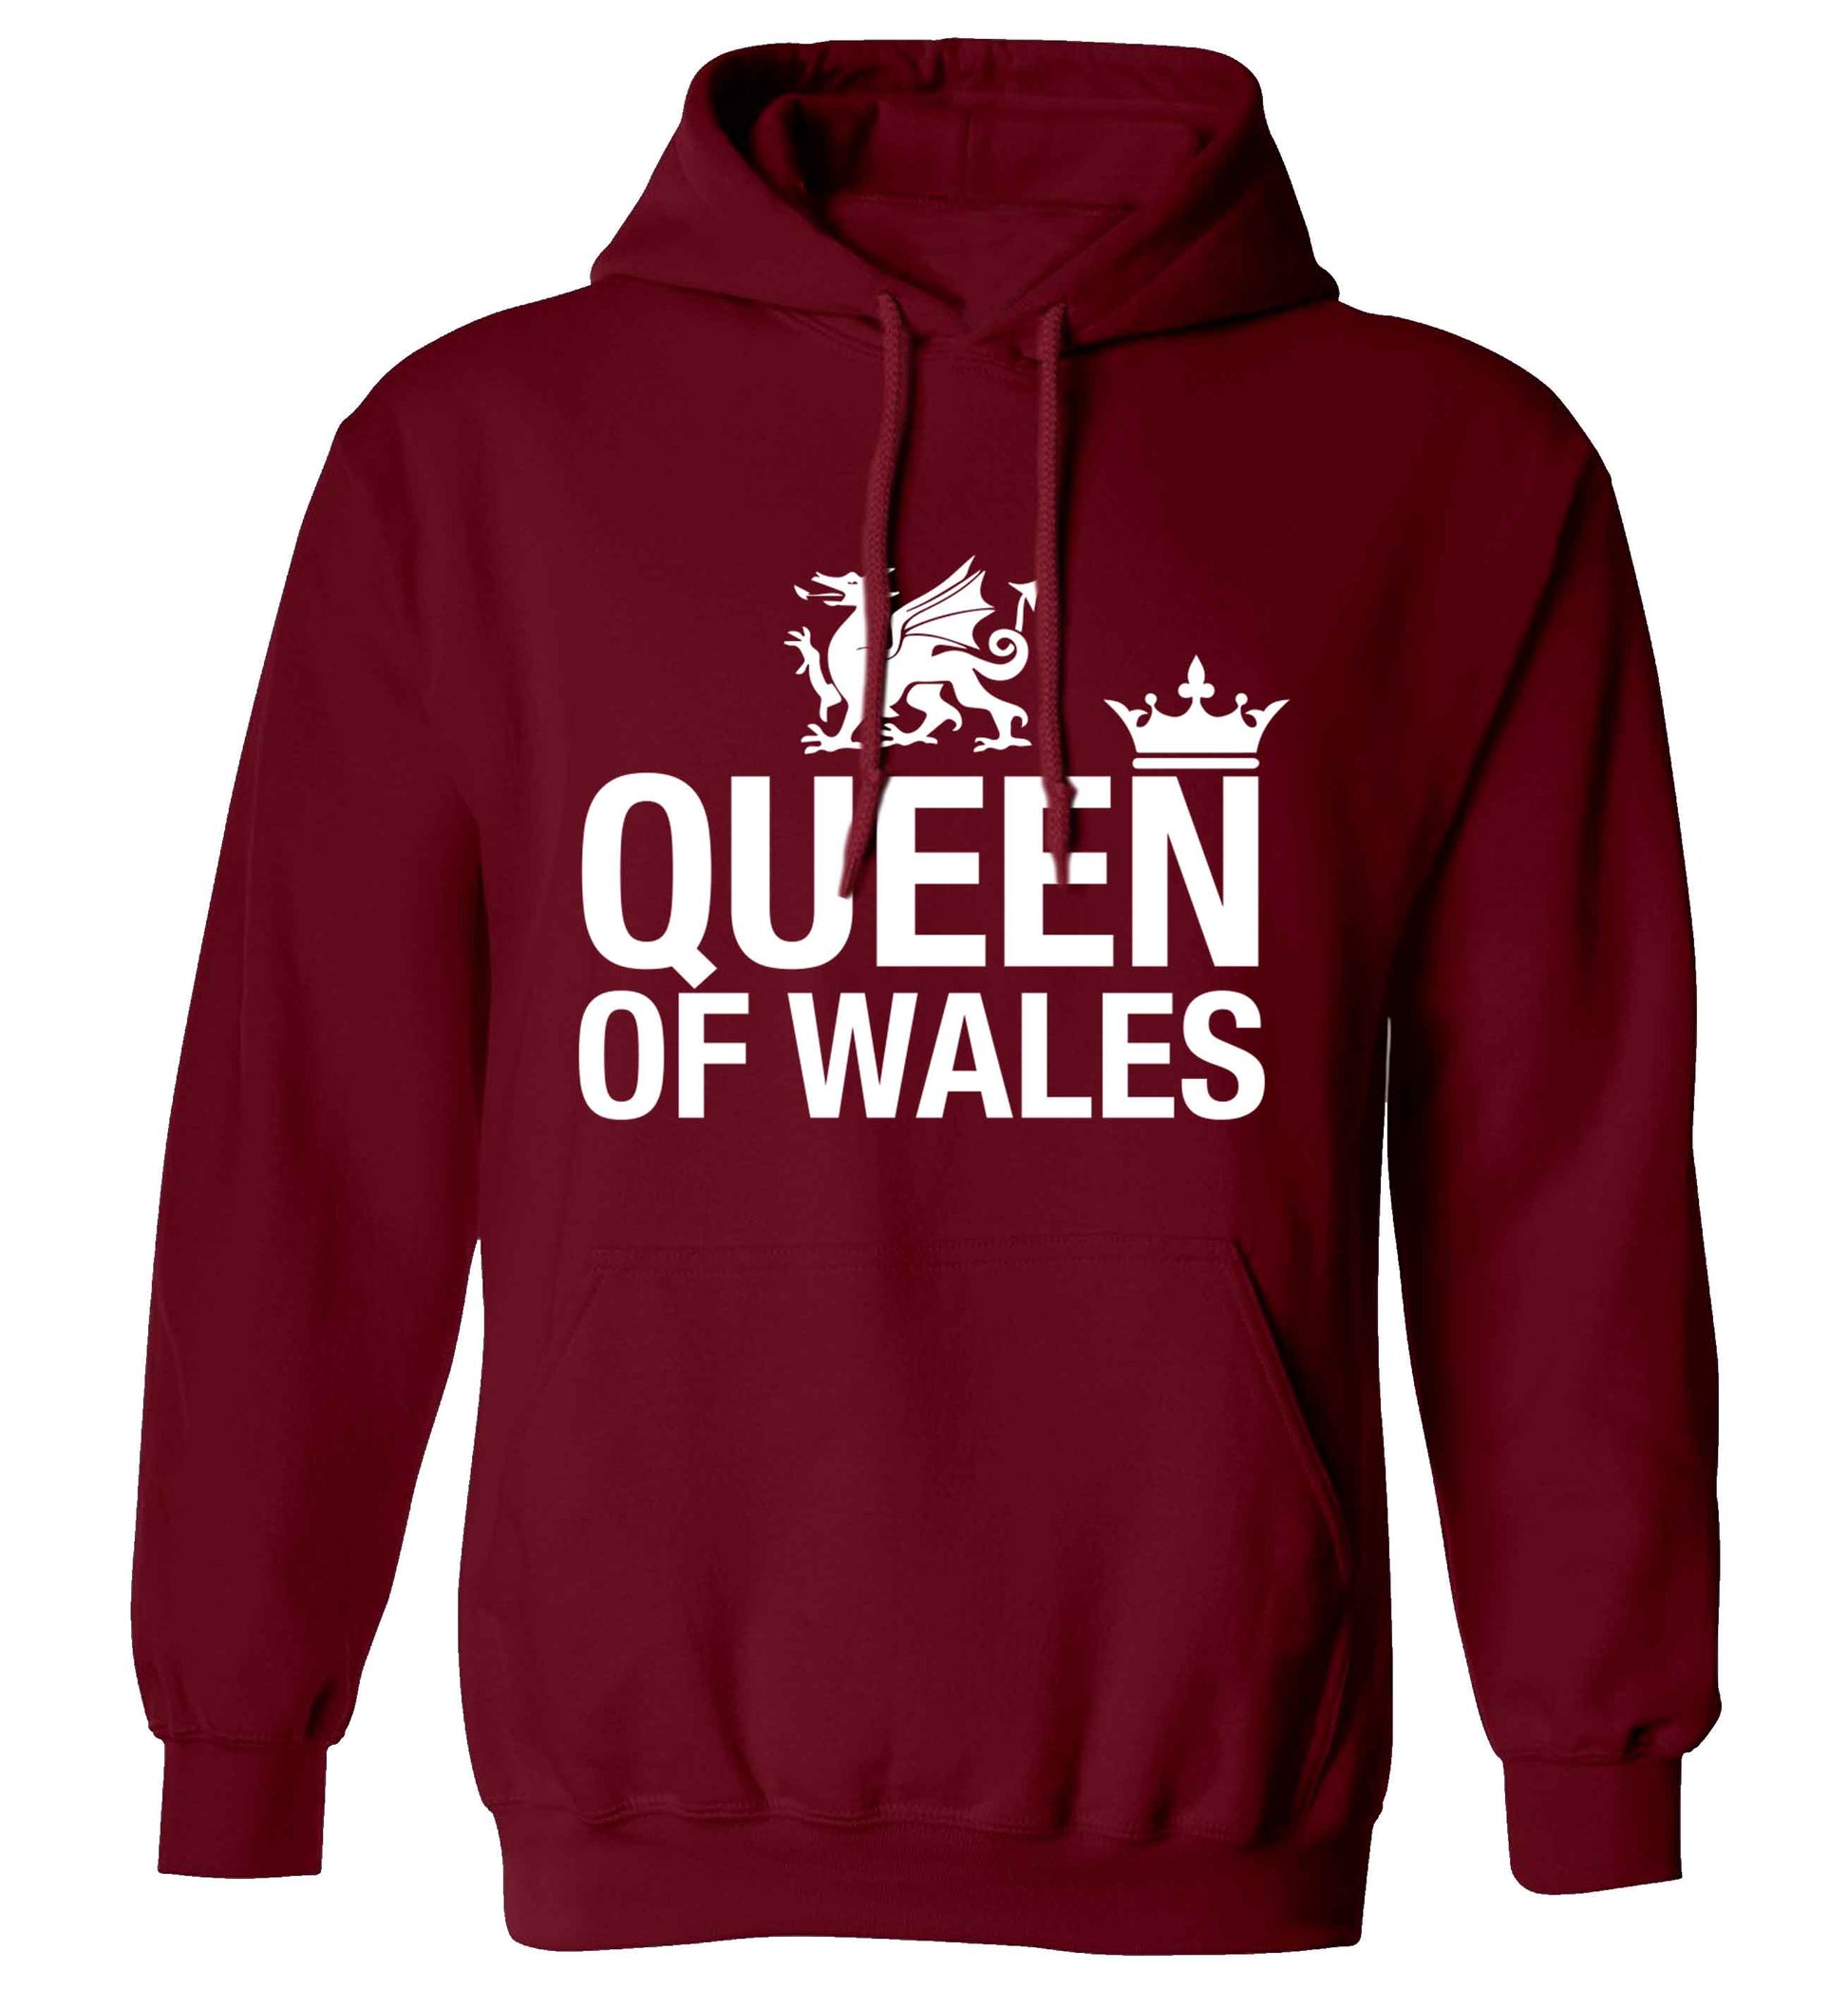 Queen of Wales adults unisex maroon hoodie 2XL